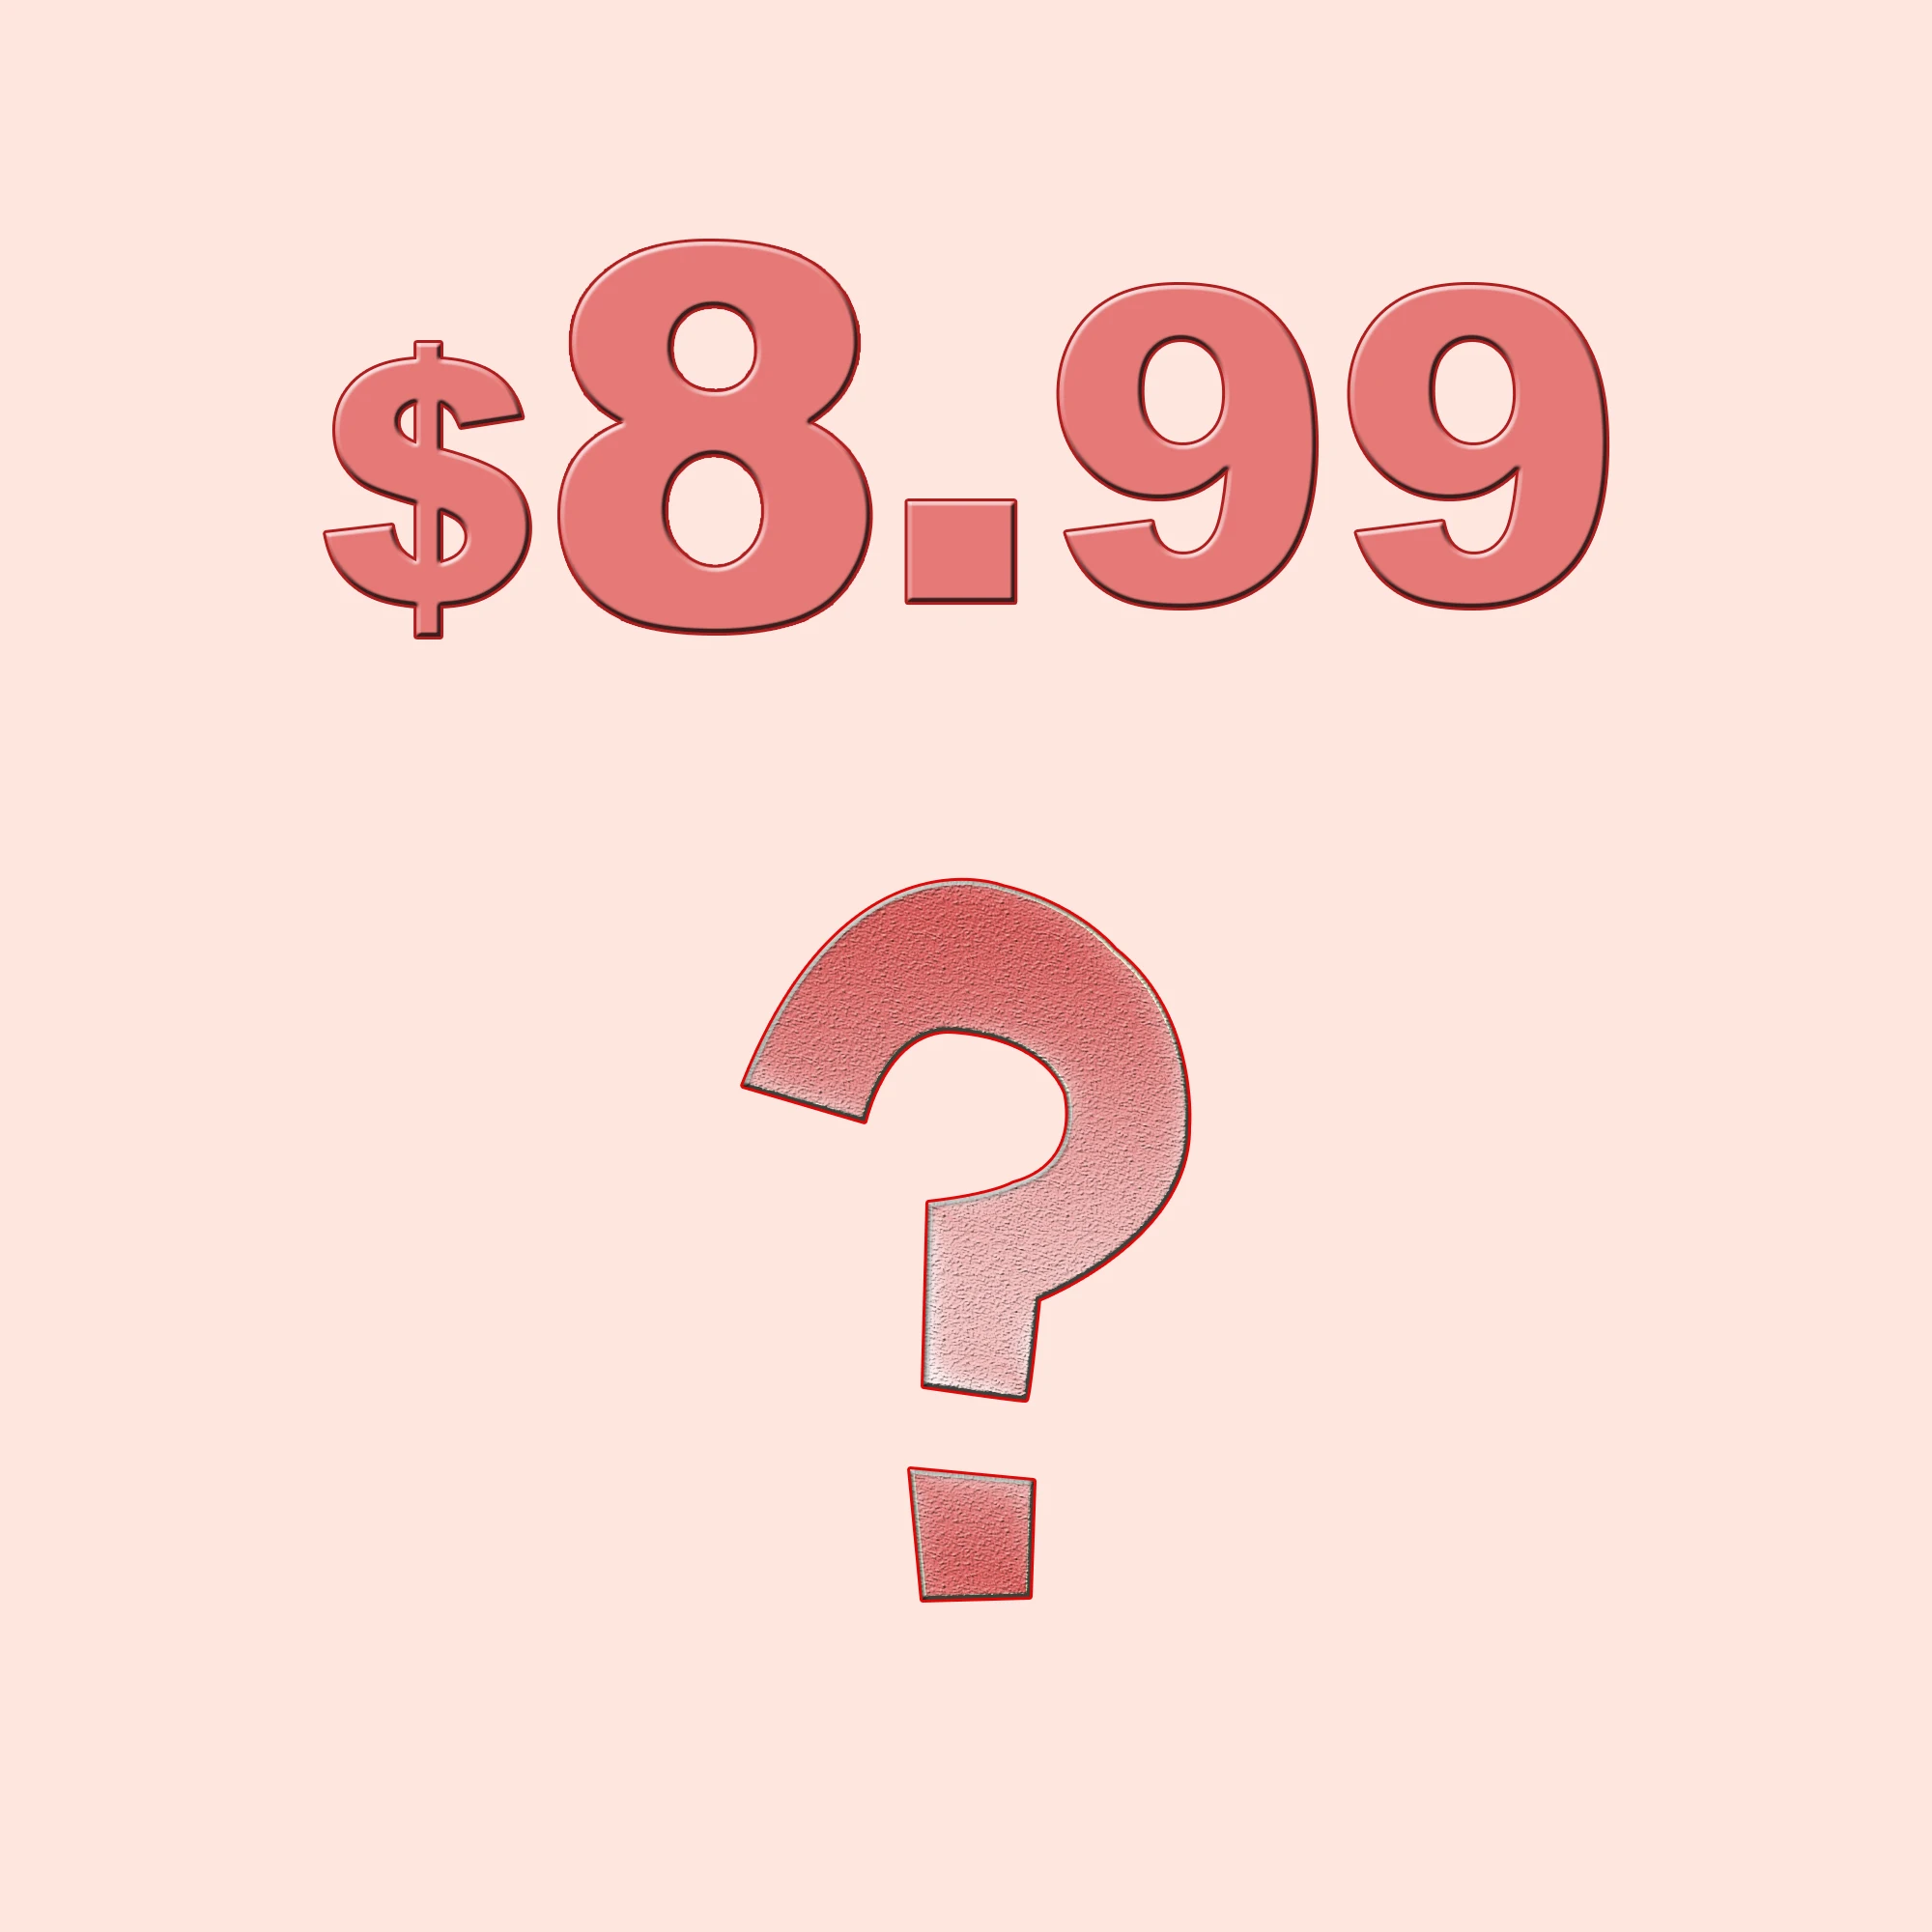 

$8.99 Mystery Bag July Special Offer Random Men Women Watch Value Surprise Digital Quartz Watch